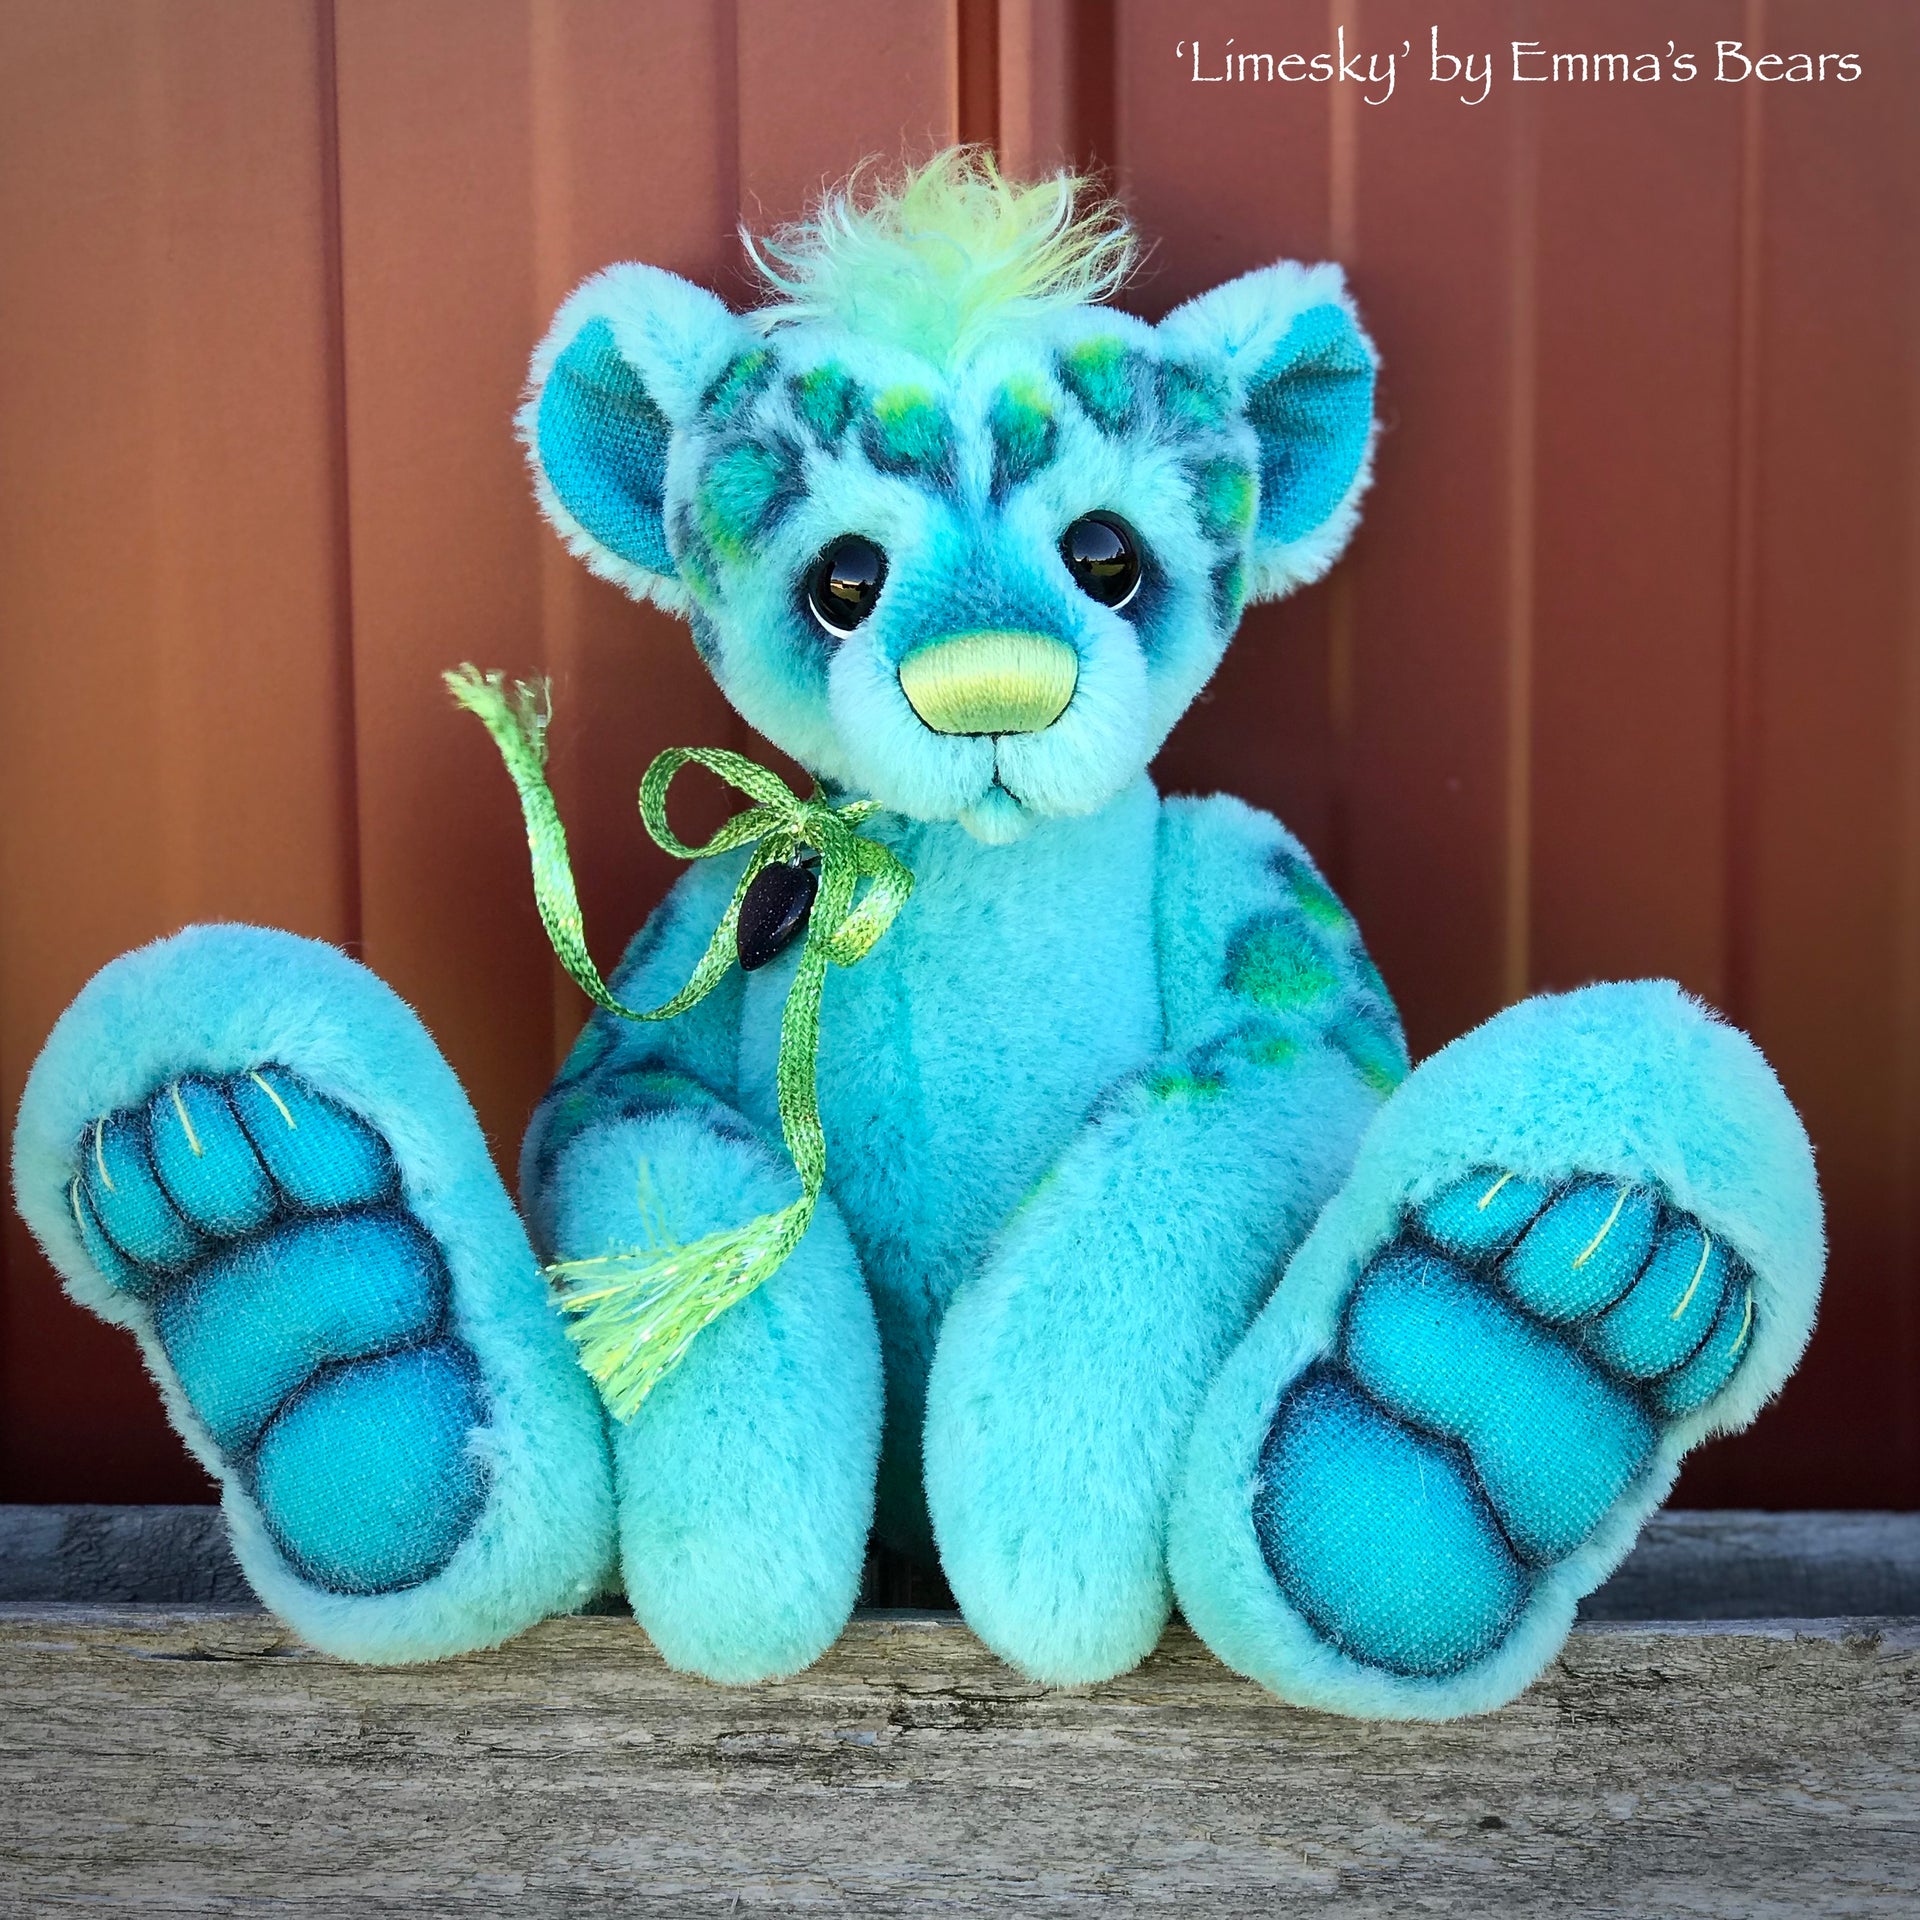 Limesky - 12" Hand-dyed Alpaca Bear by Emma's Bears - OOAK